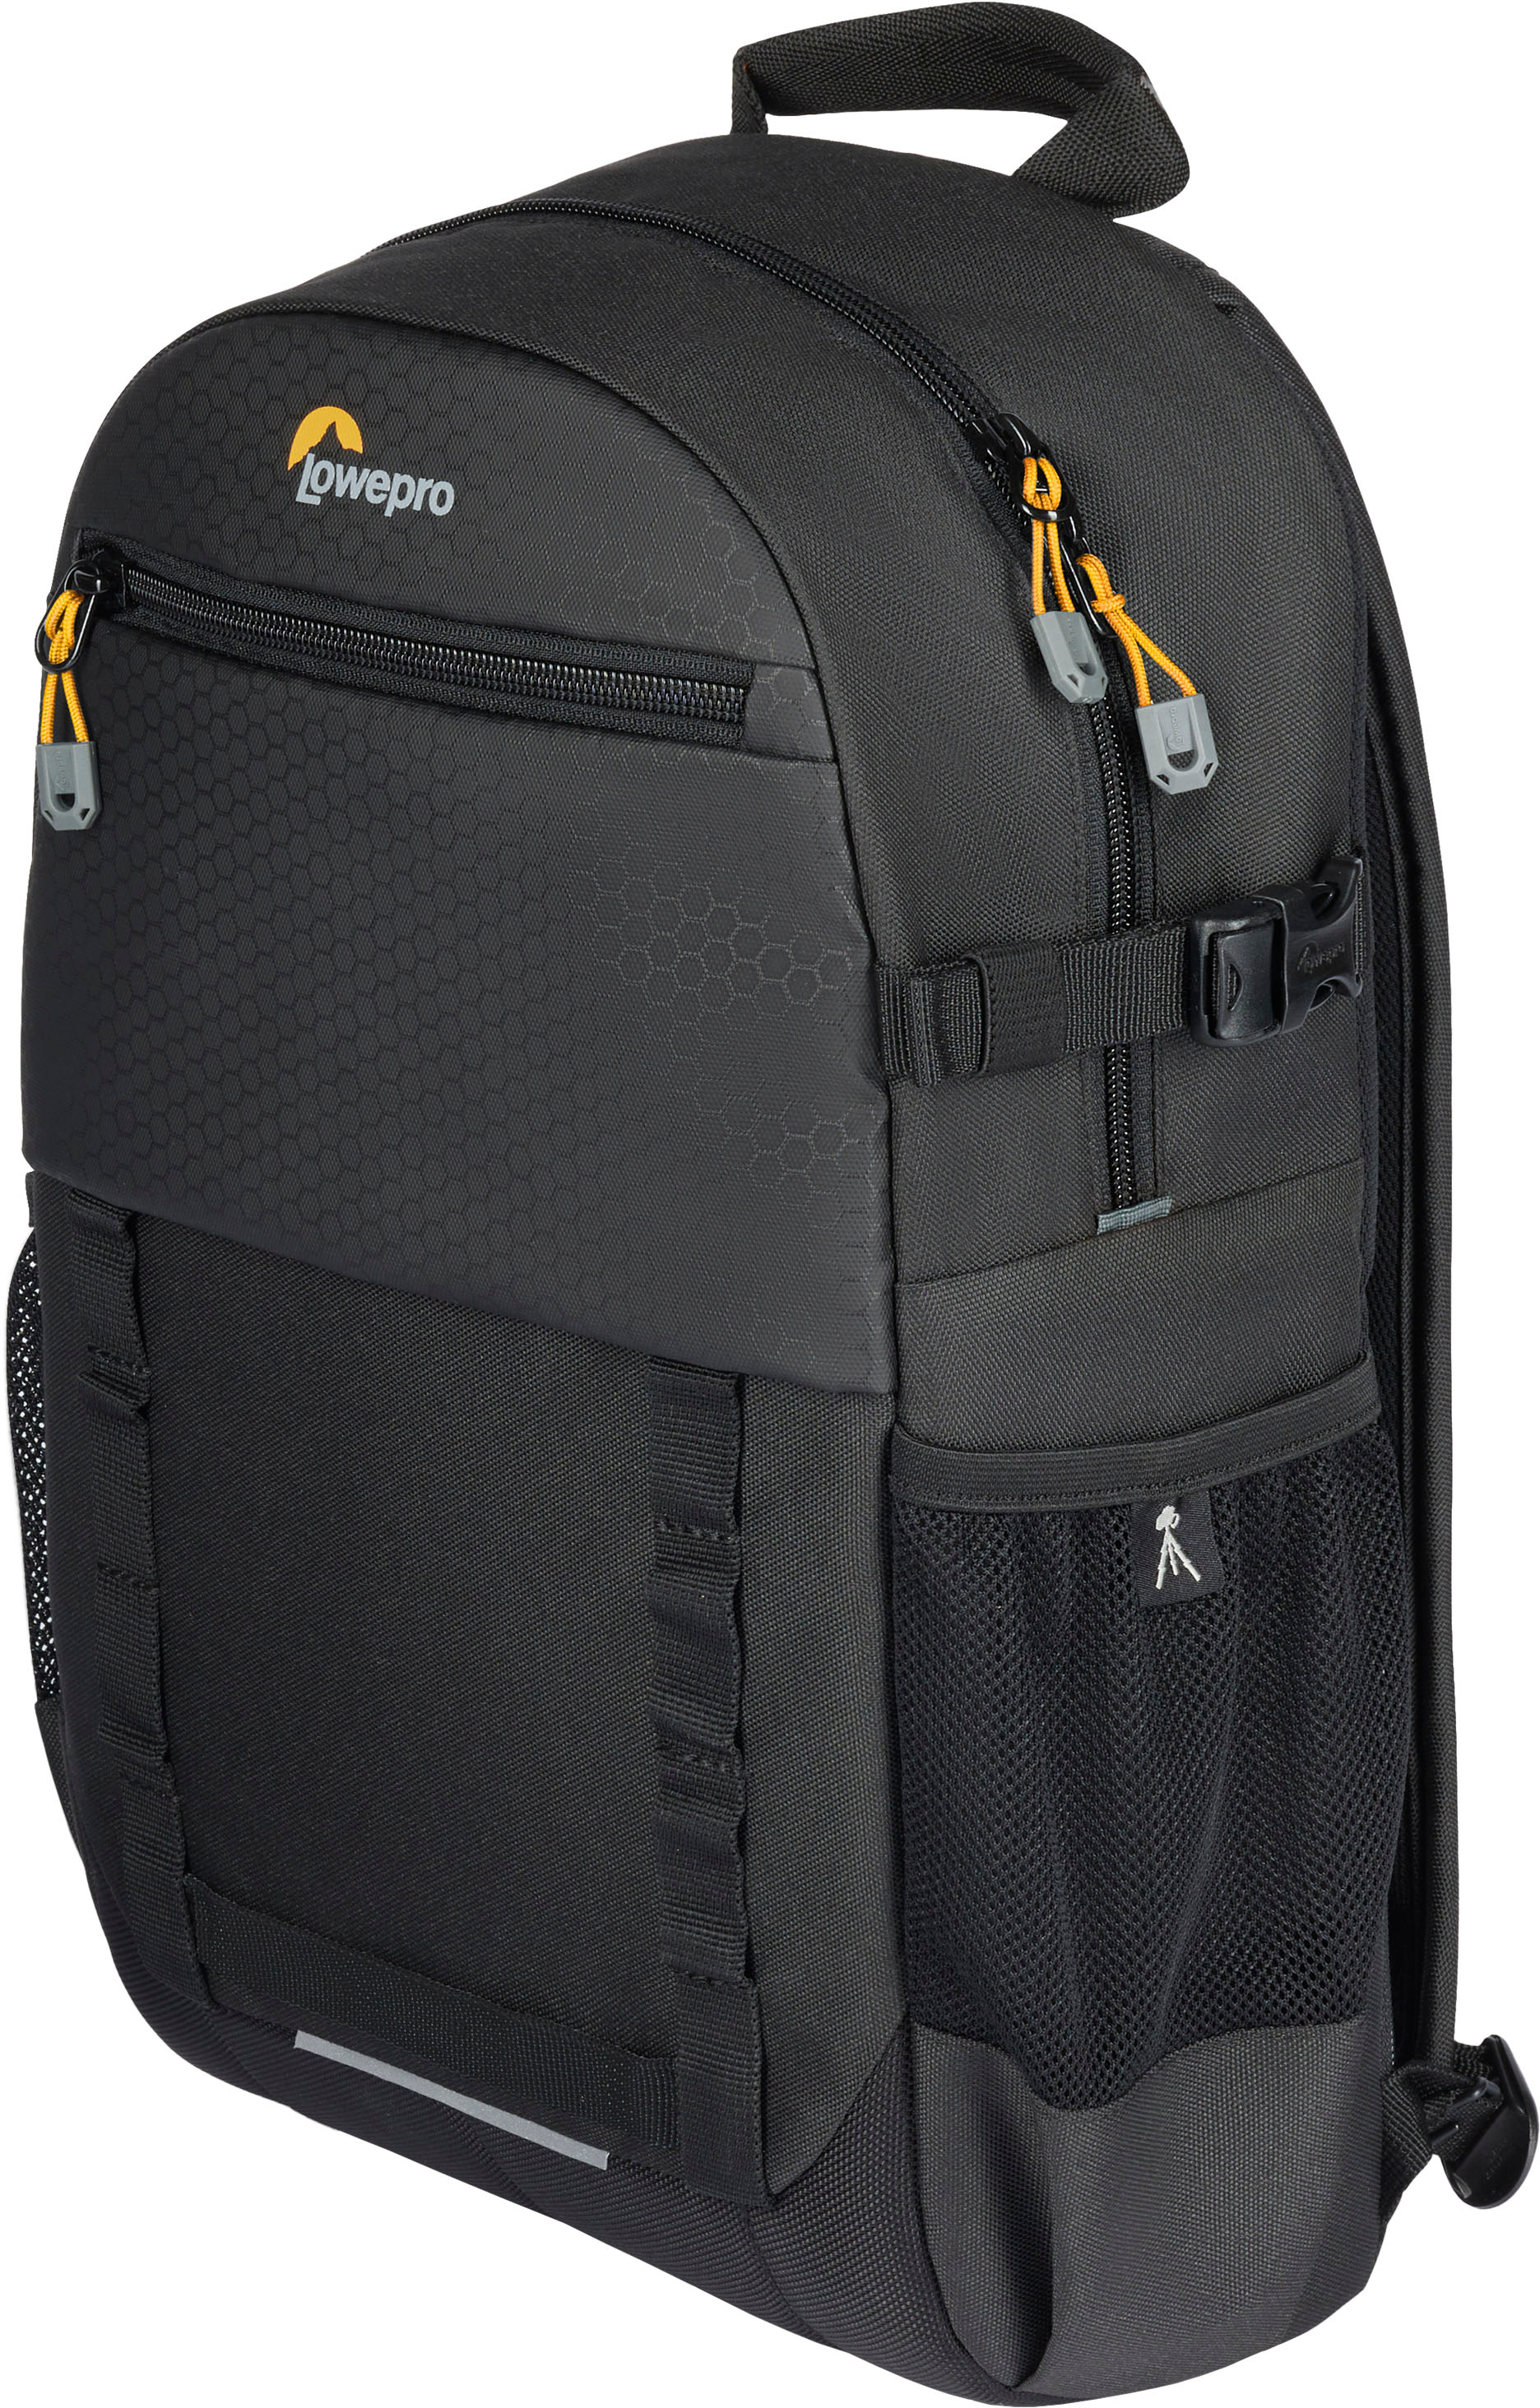 Angle View: Peak Design - Everyday Backpack 20L Zip - Black